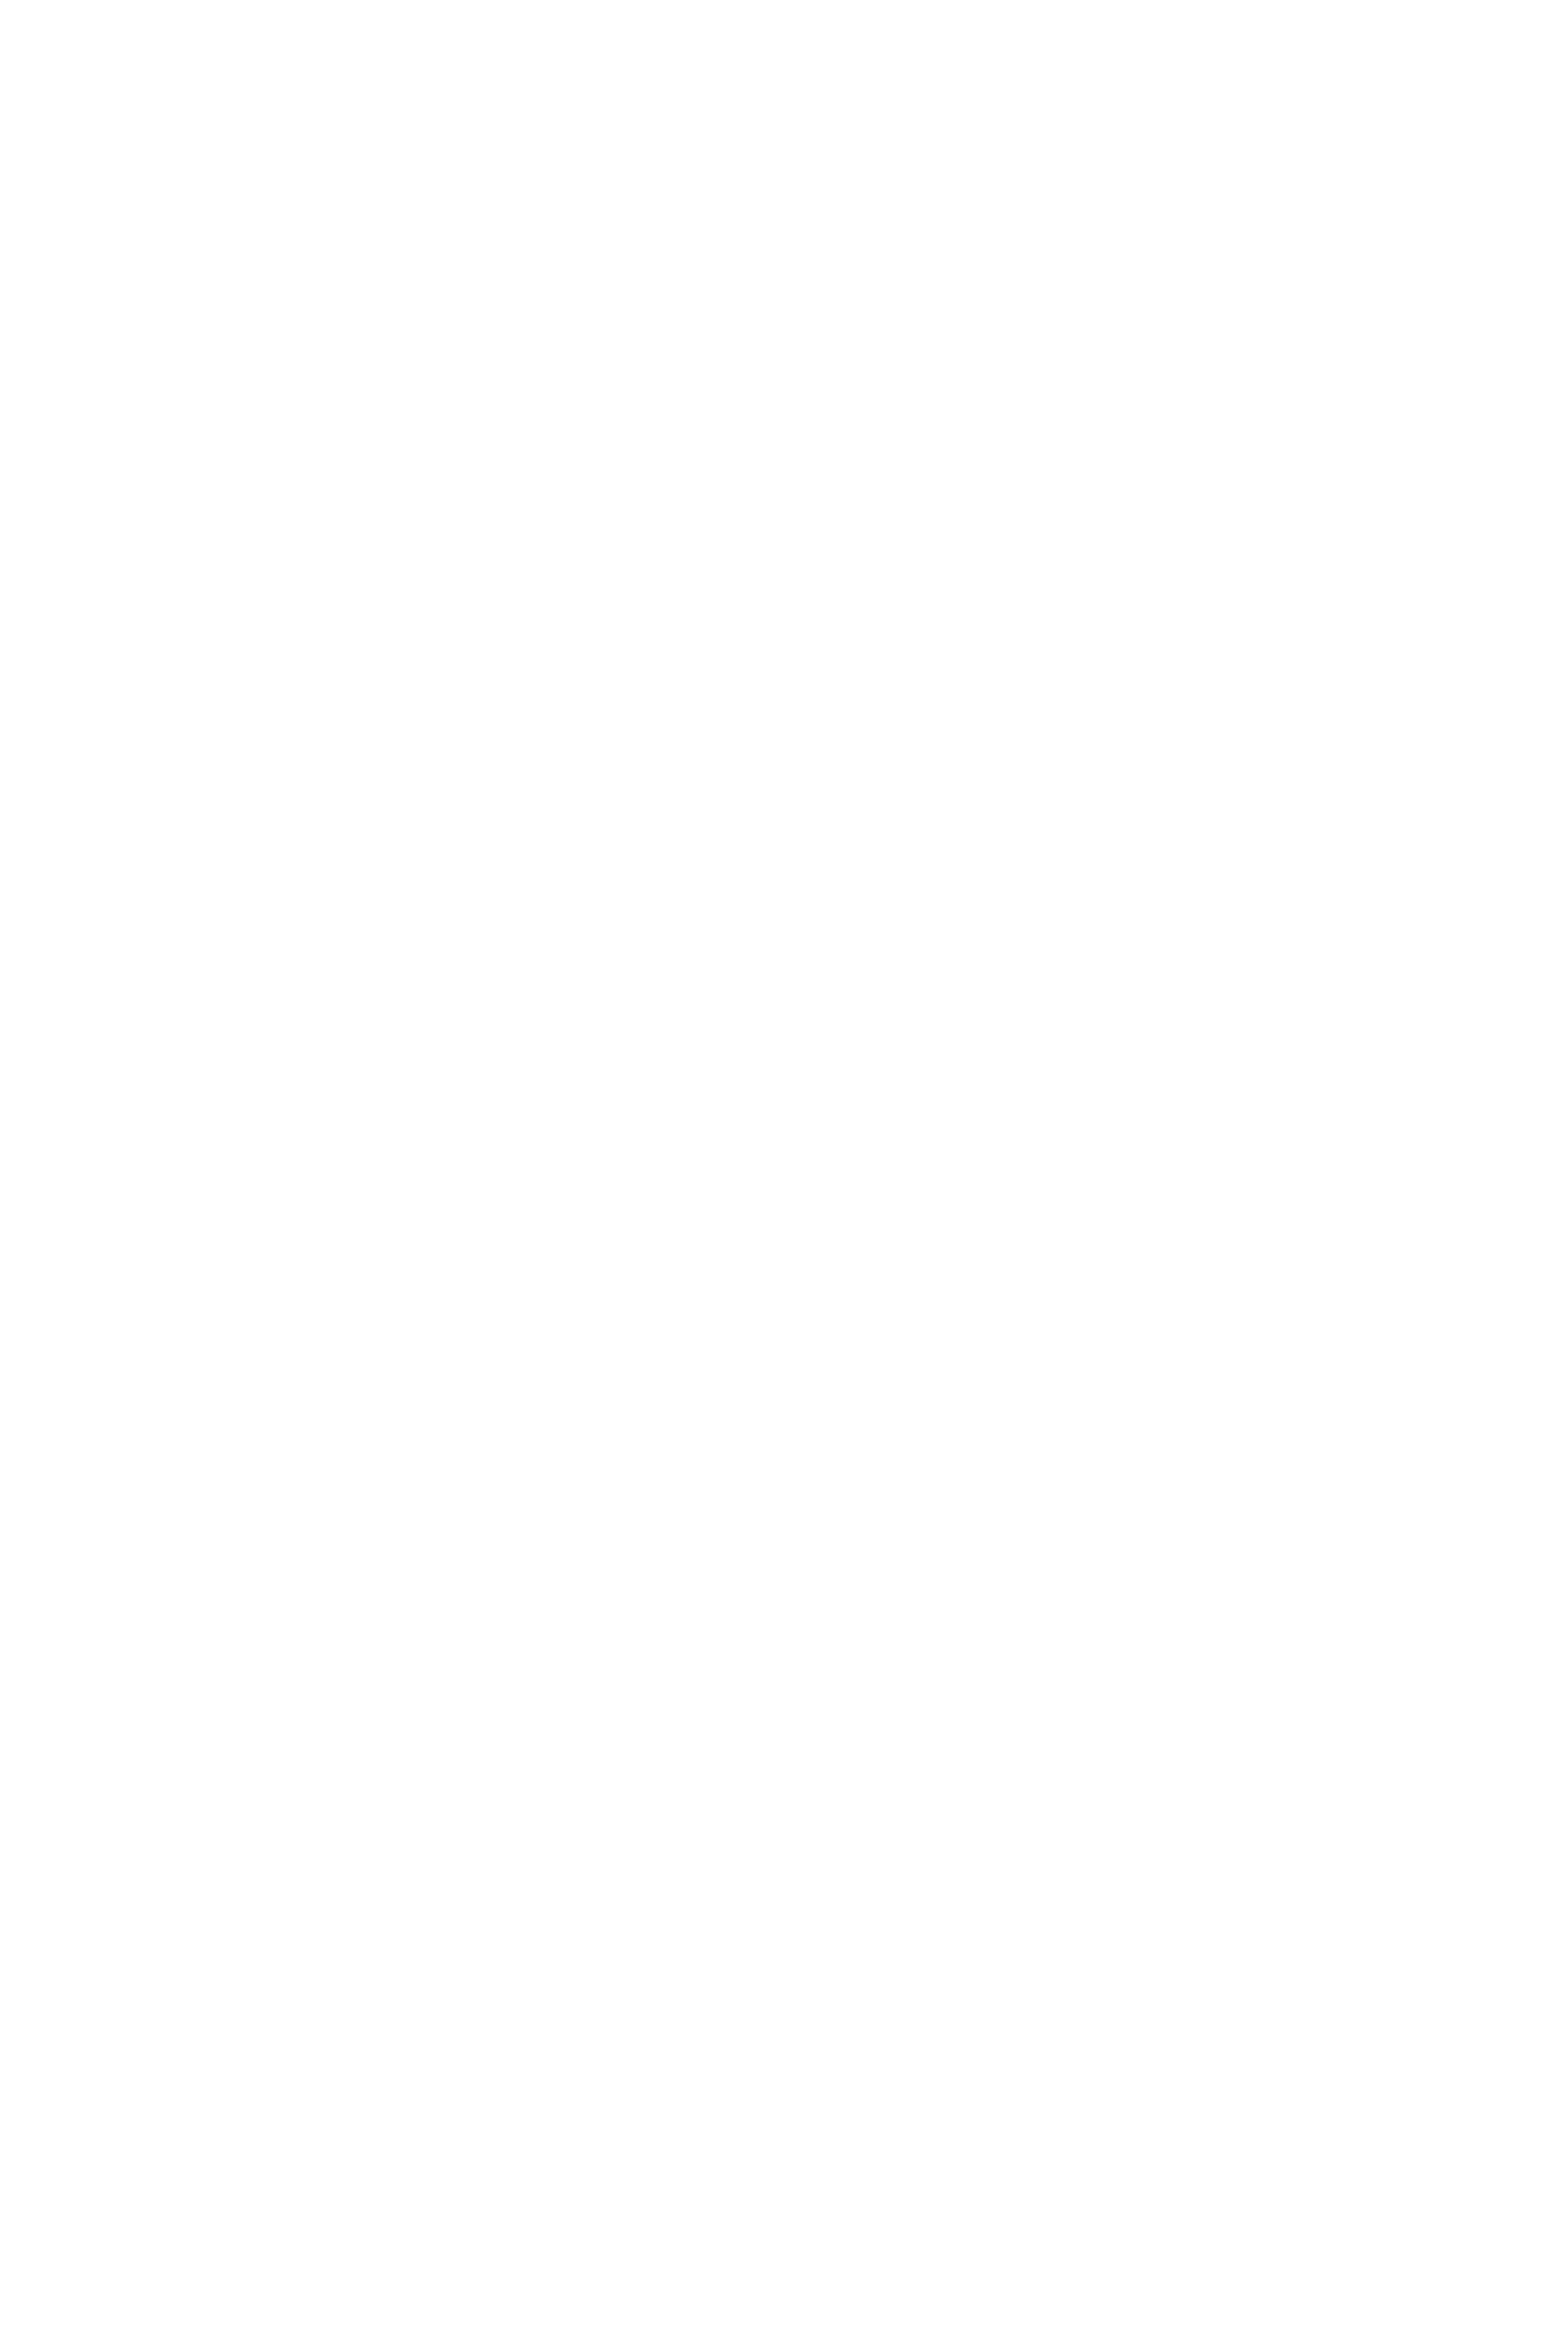 Вязаный джемпер по картине Ван Гога "Старая мельница" бренда "Таня Исаева"